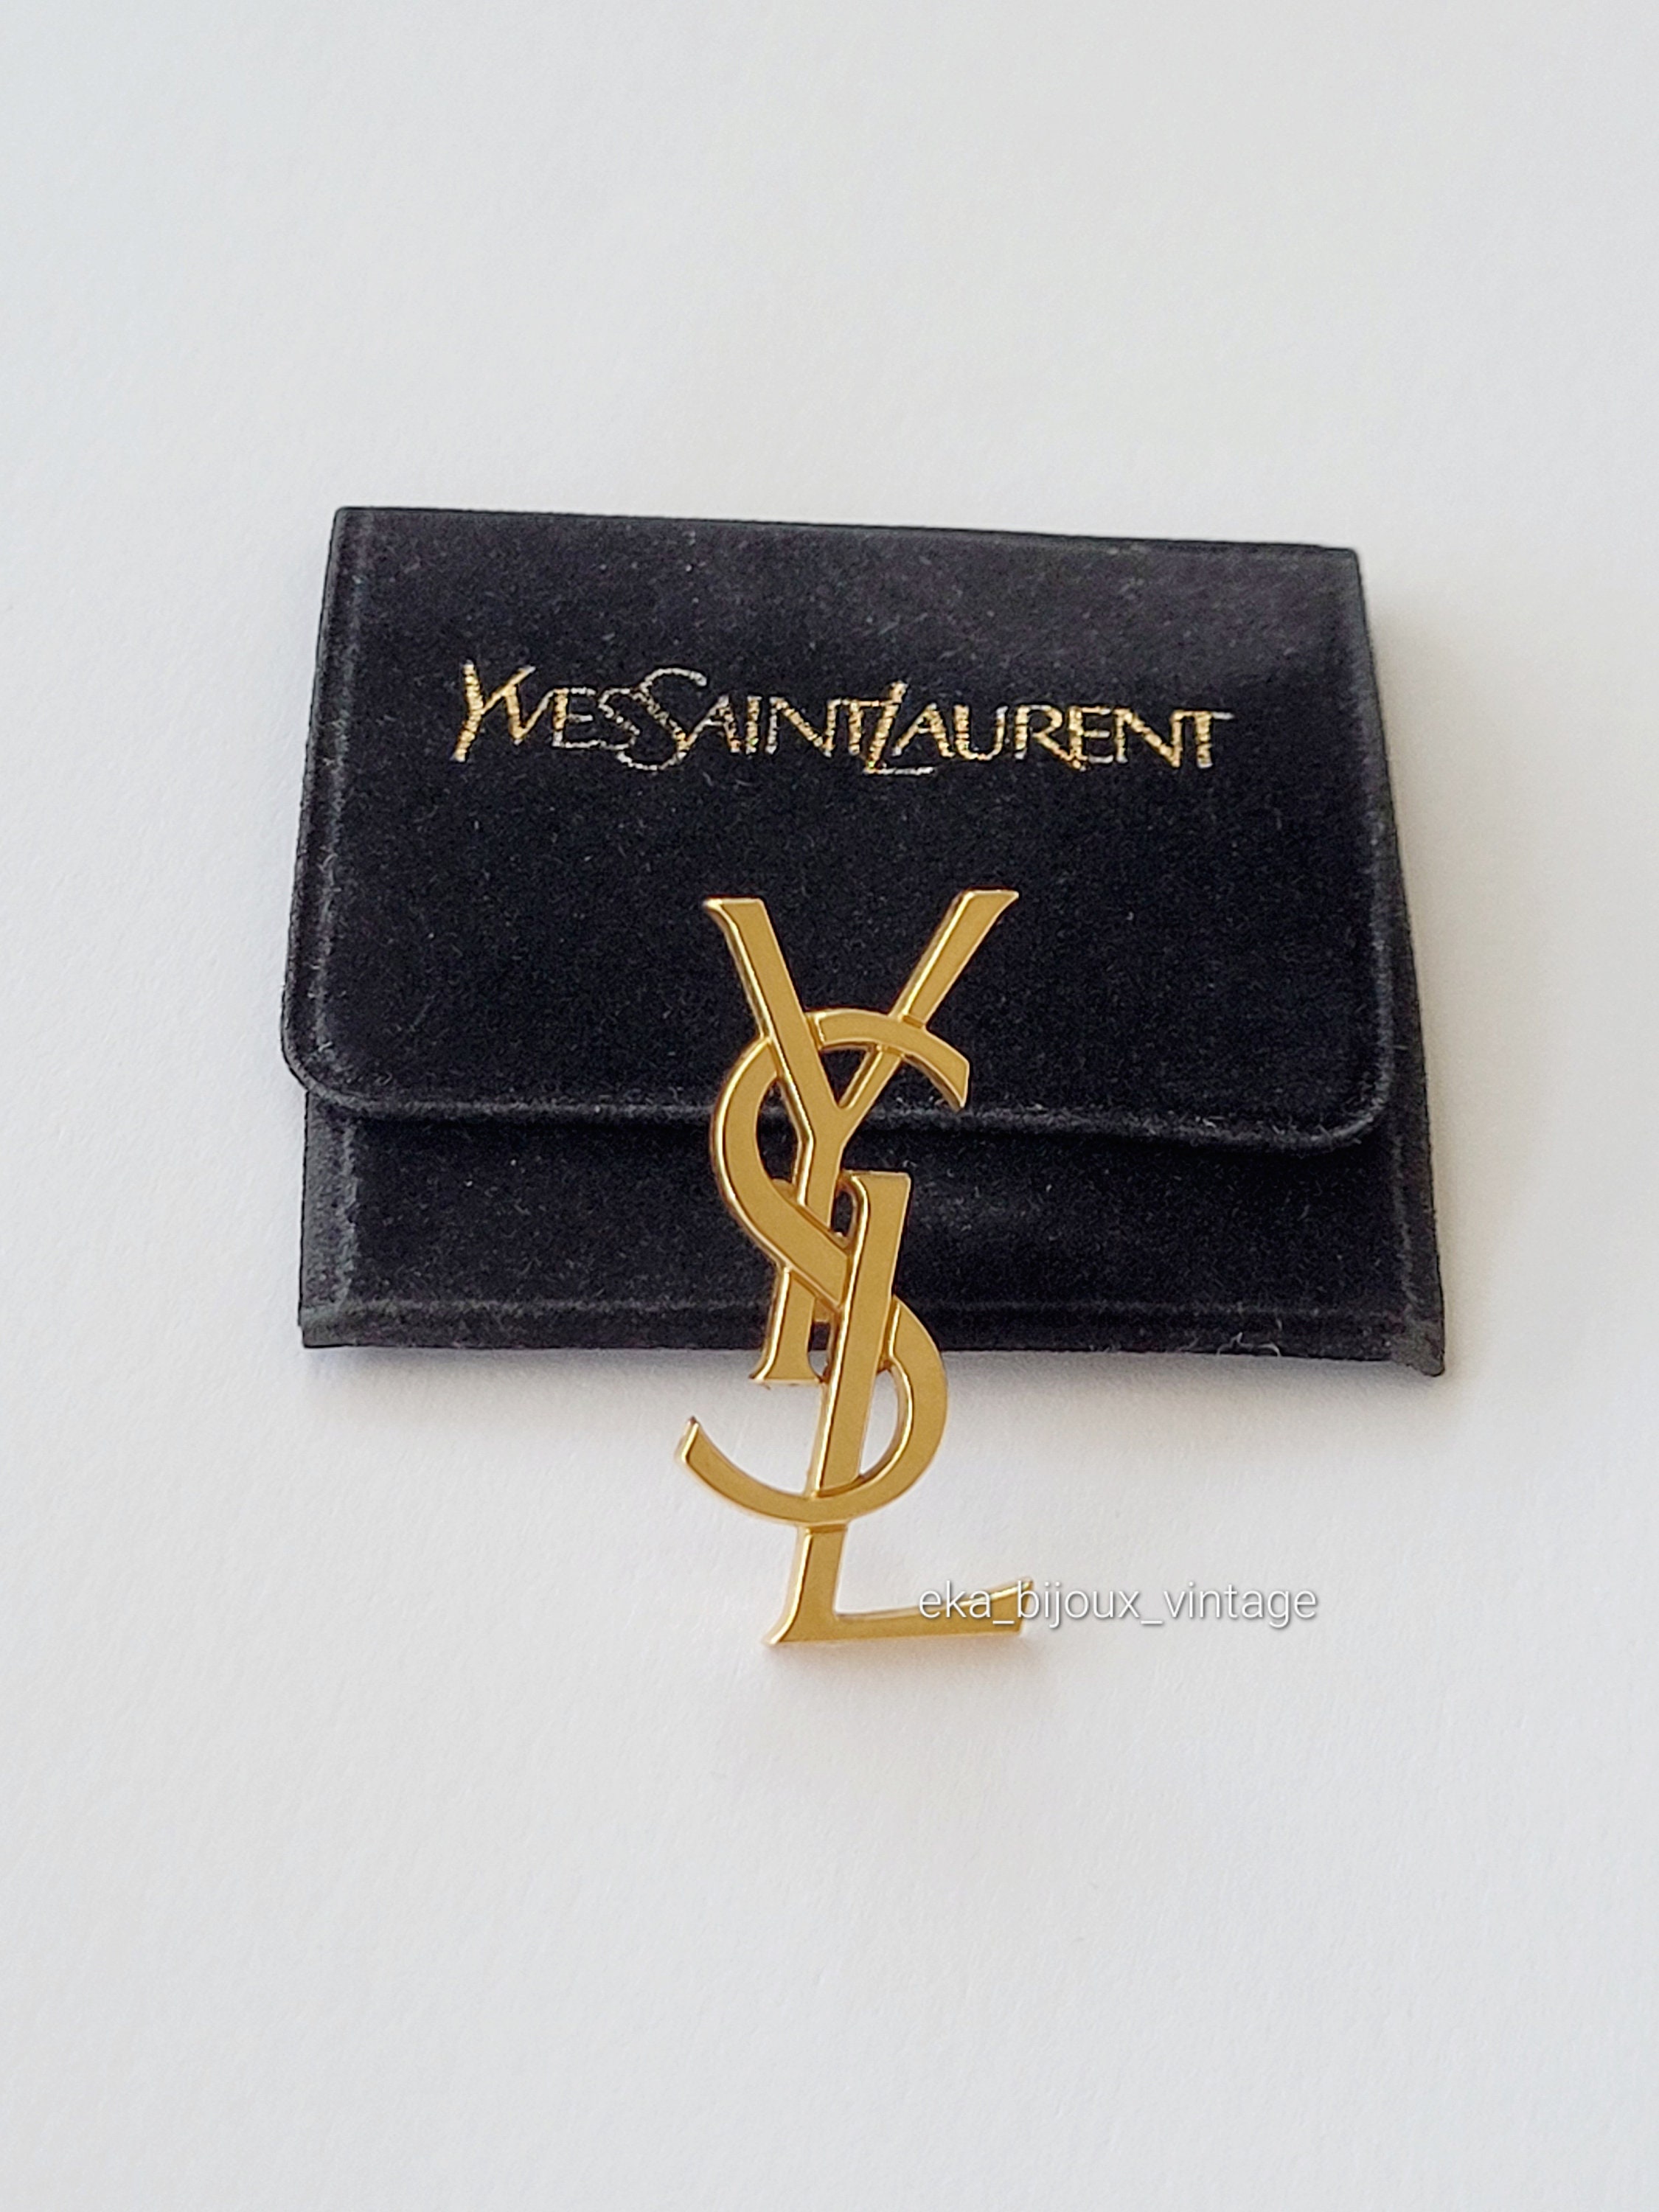 YSL Silver Star Card Holder - Yves Saint Laurent, Luxury, Bags